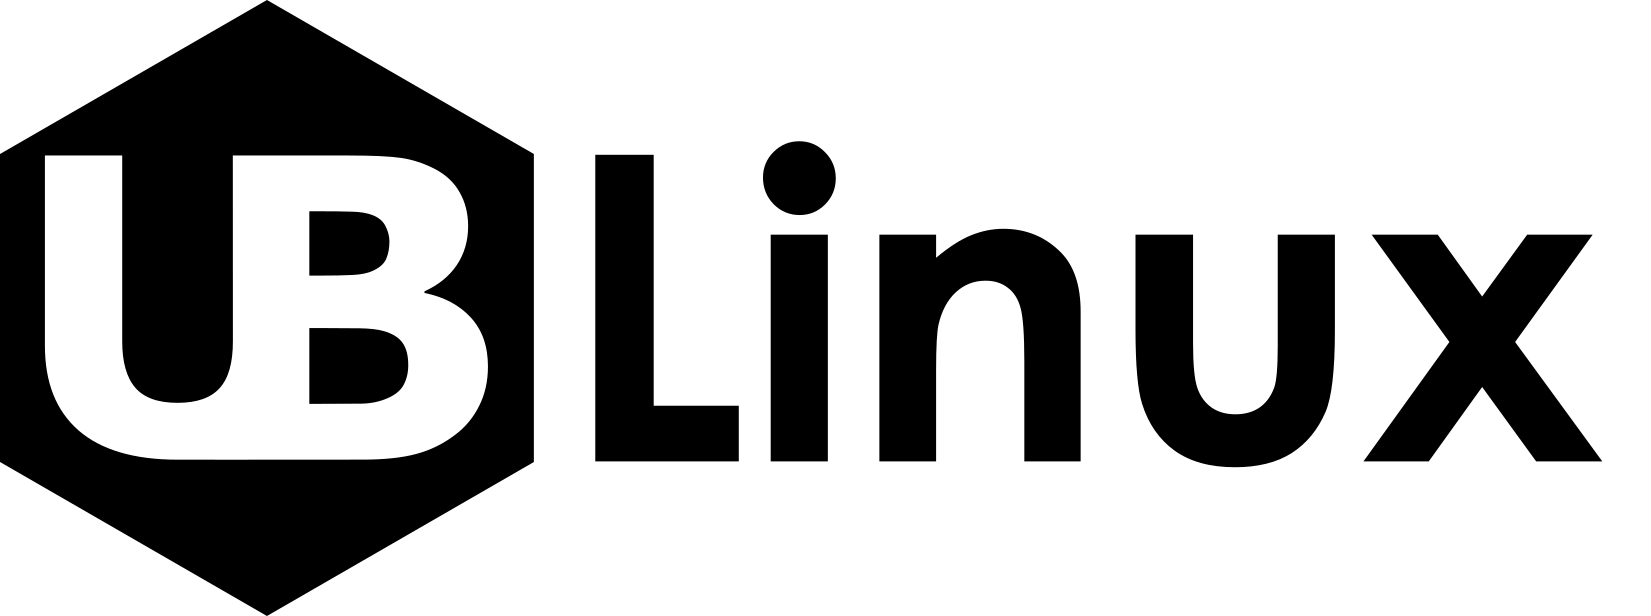 Логотип UBLinux чёрно-белый